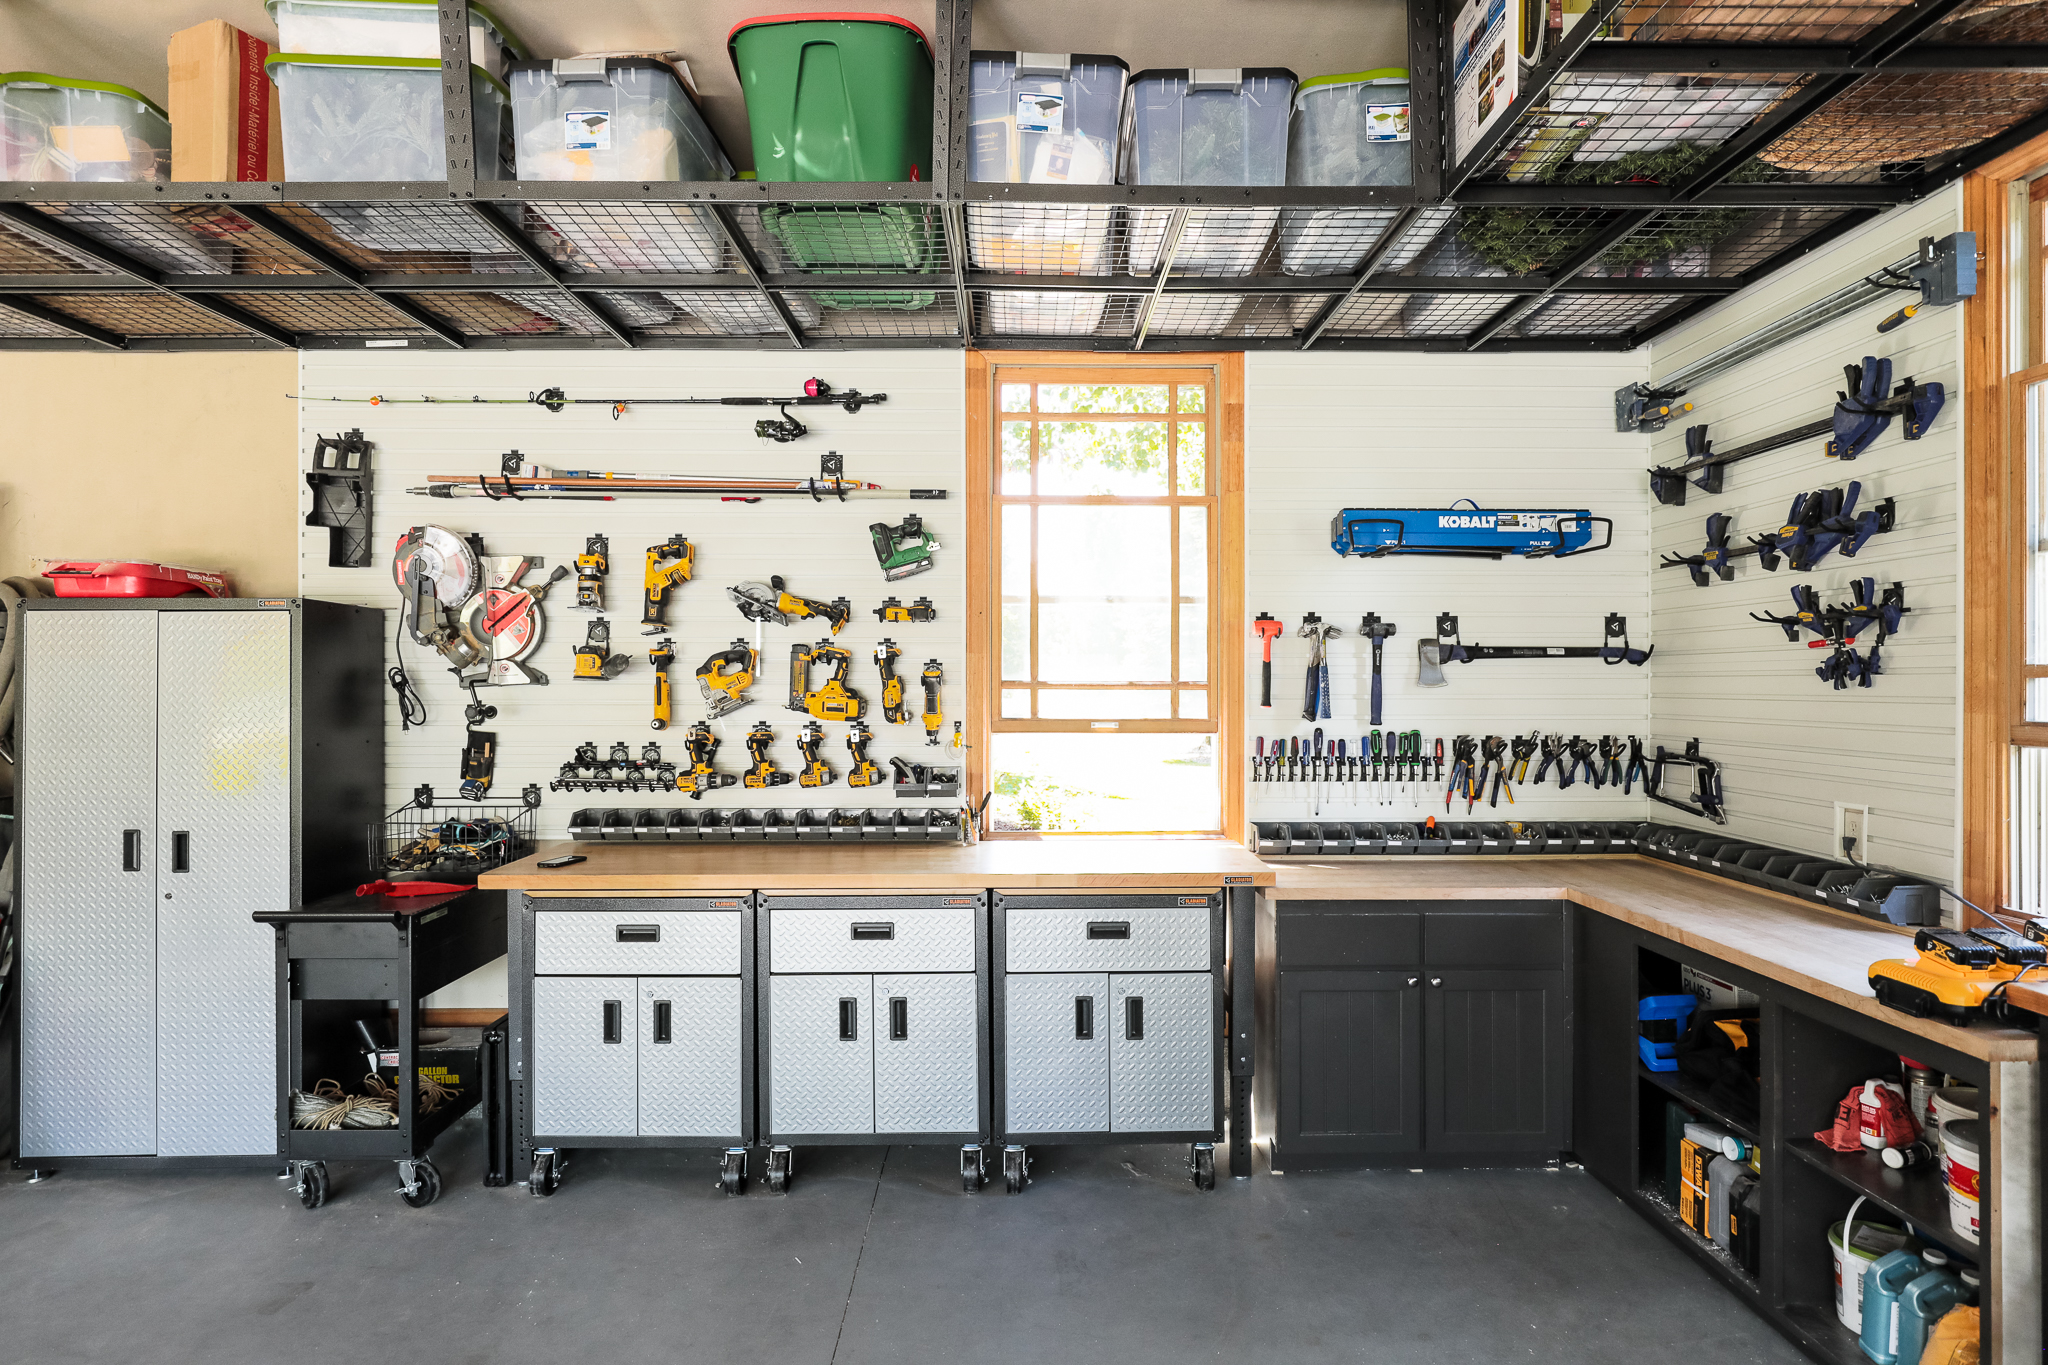 contemporary garage tool storage ideas